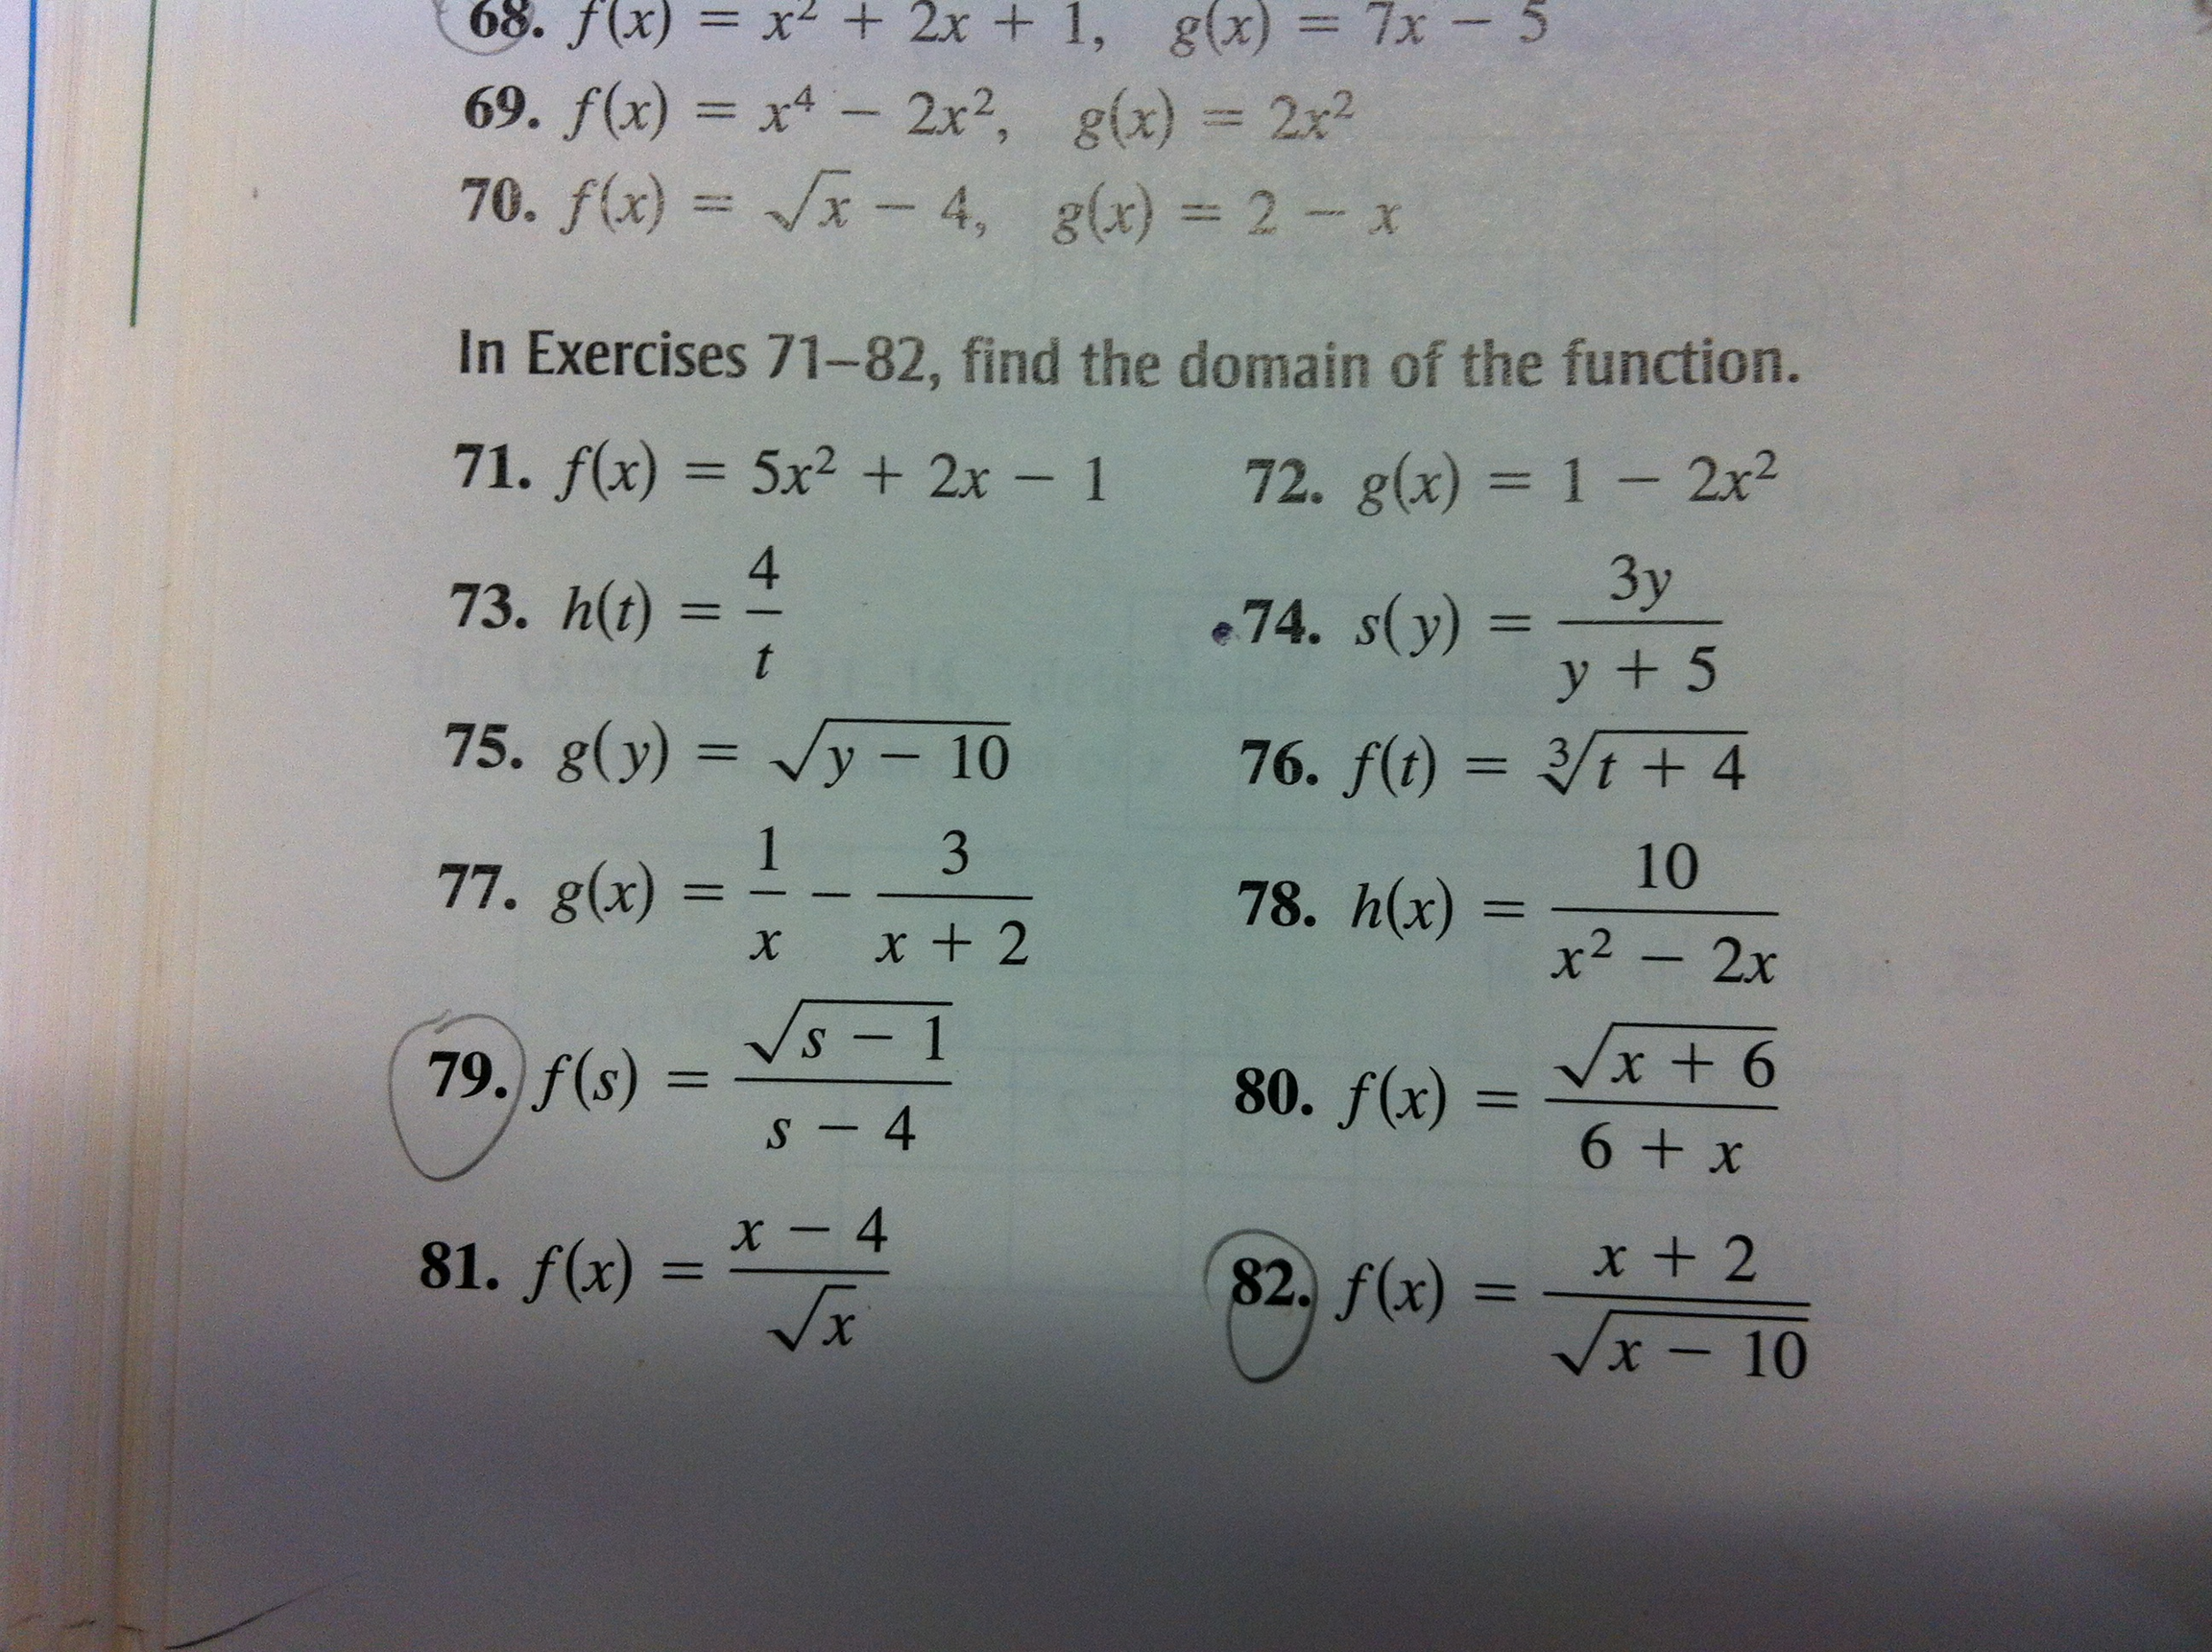 Solved F(x) = X2 + 2x + 1, G(x) = 7x 5 F(x) = X4 2x2,